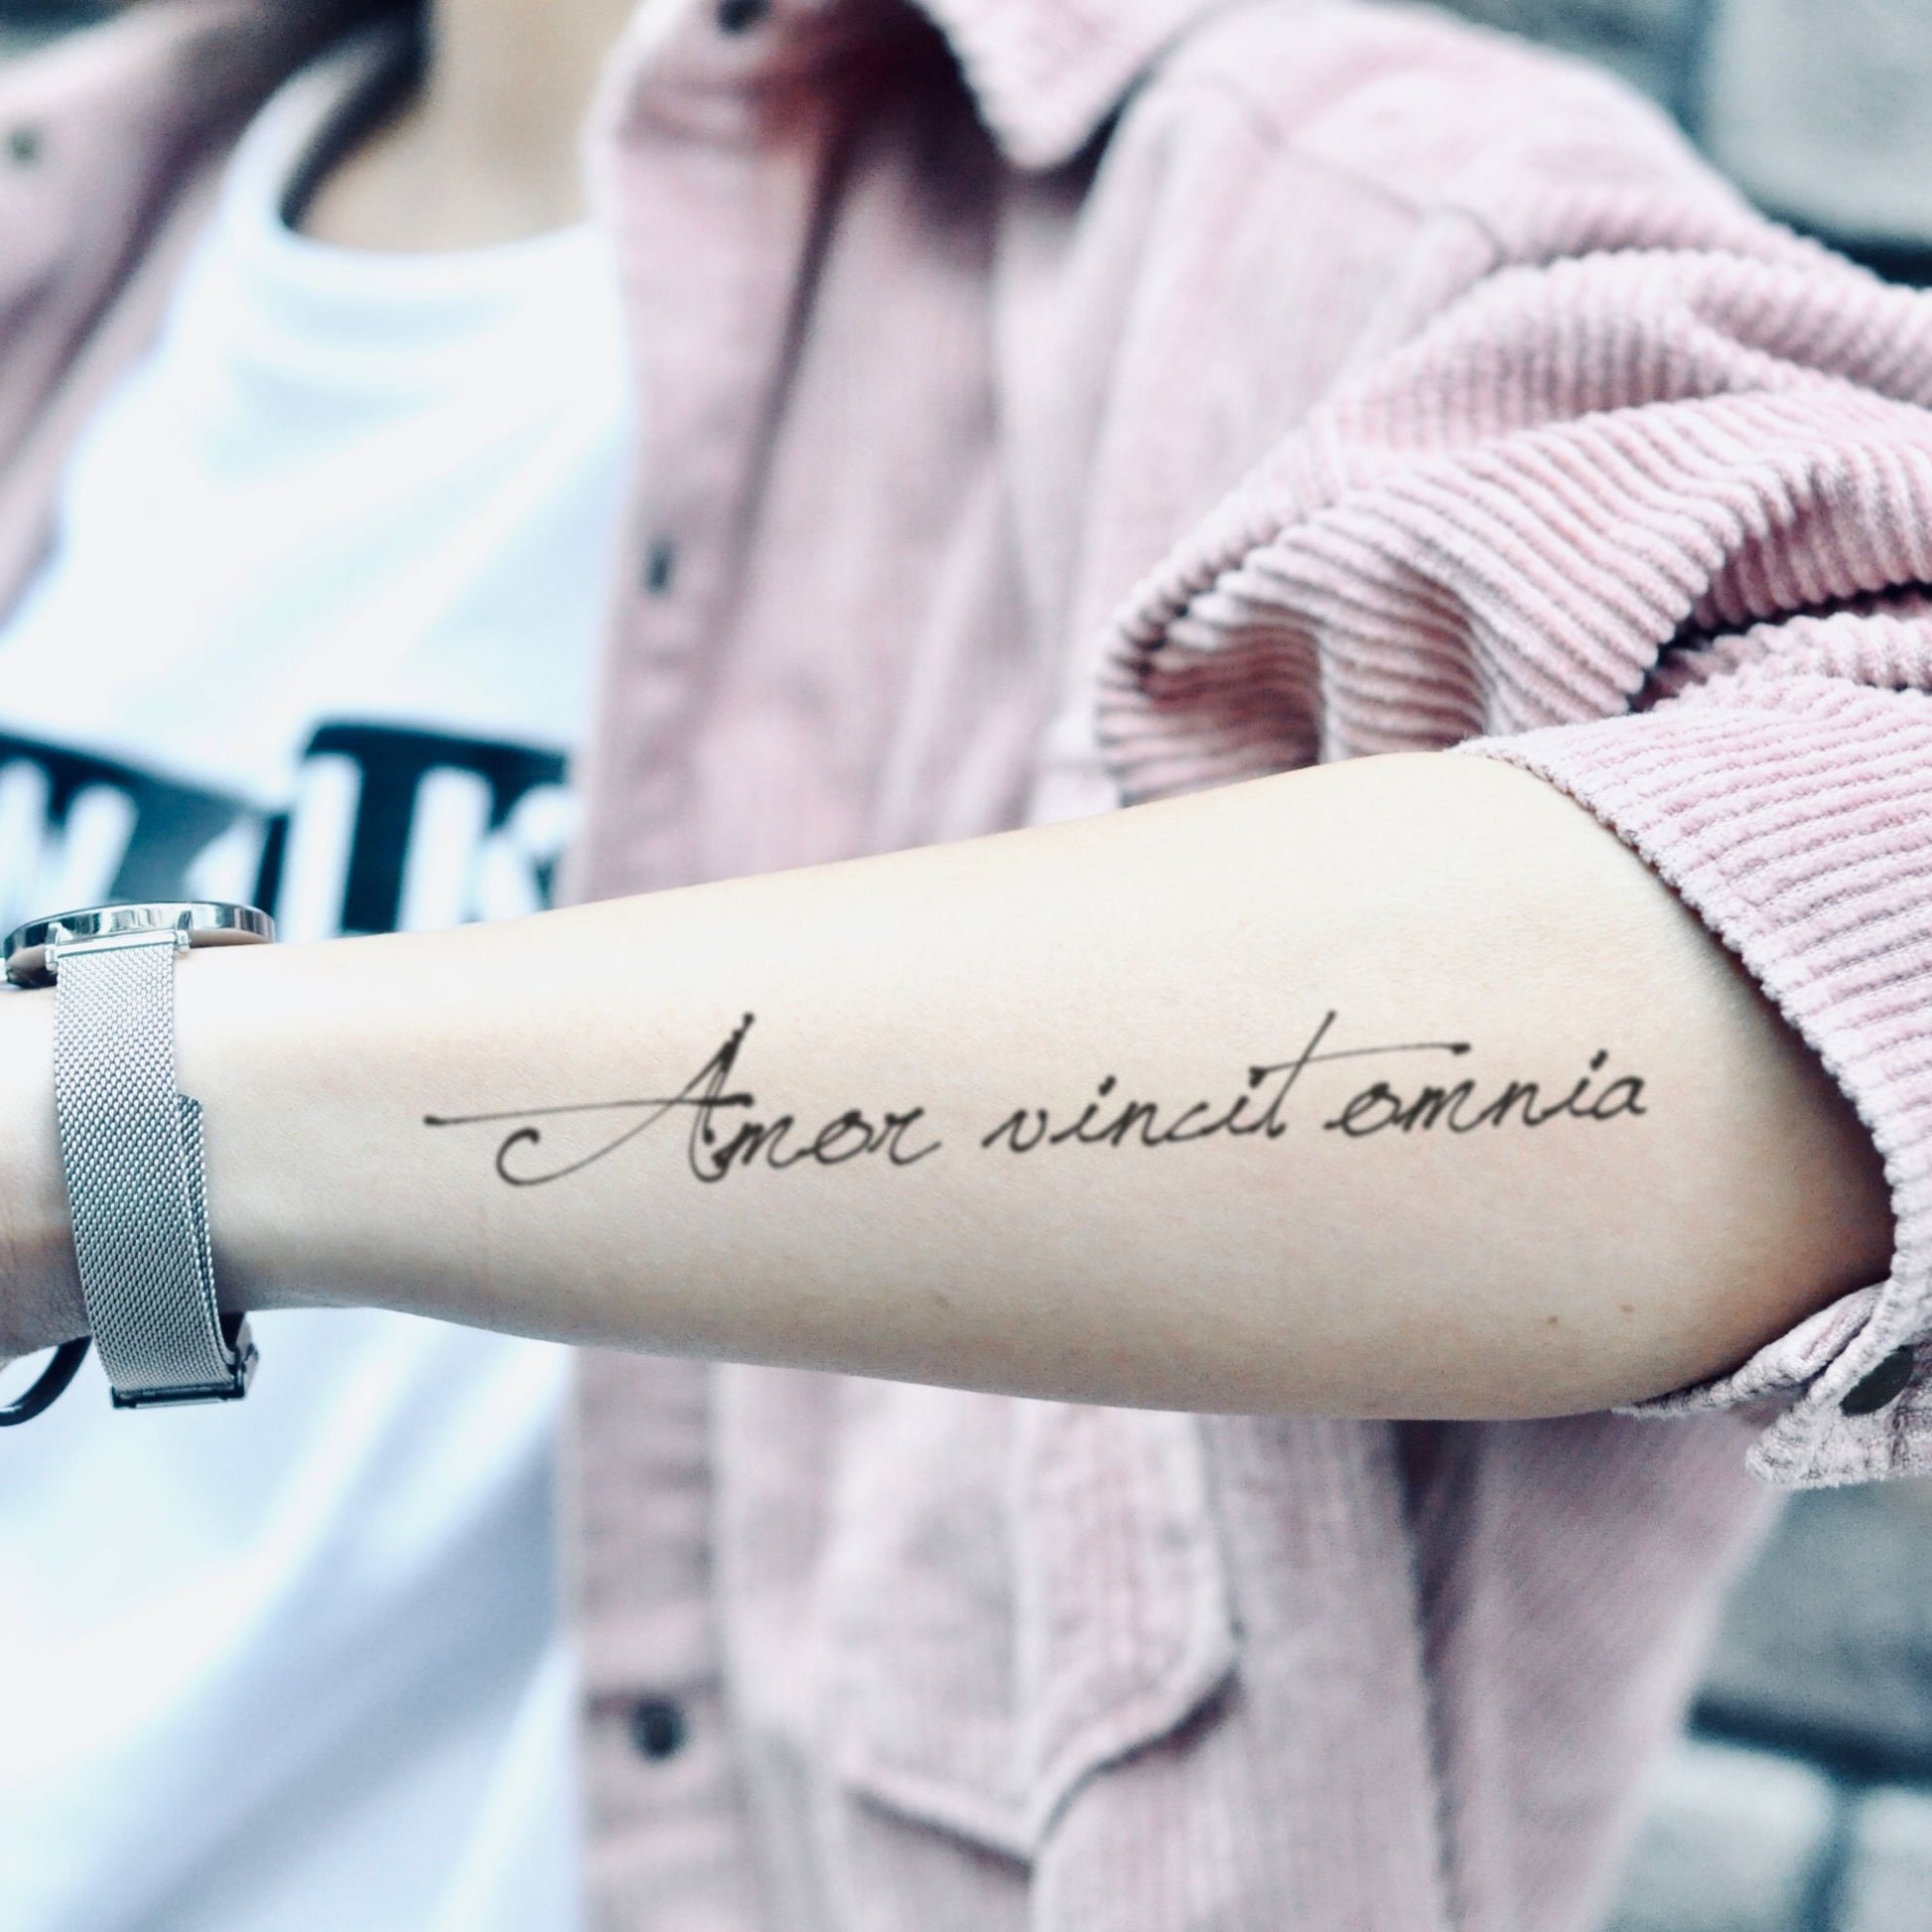 fake medium amor vincit omnia lettering temporary tattoo sticker design idea on forearm